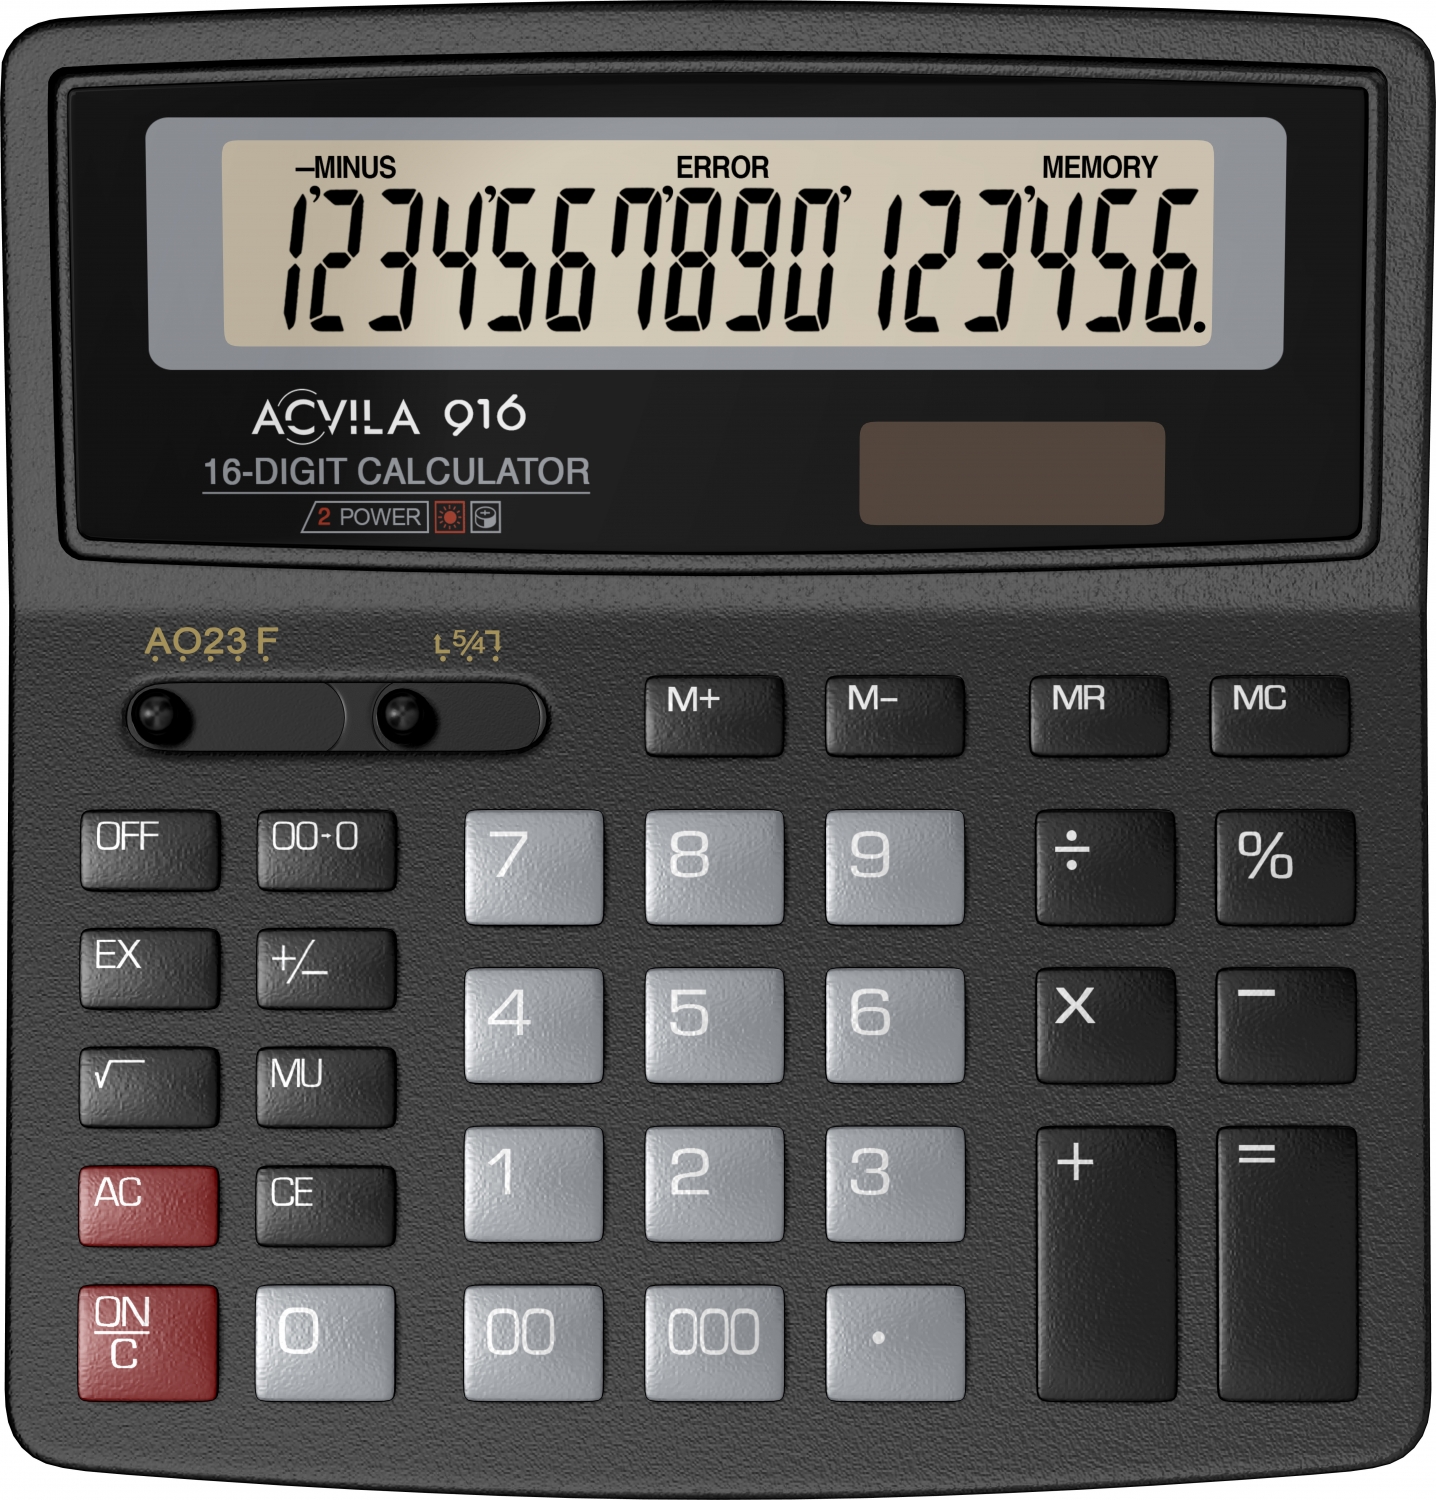 Calculator 16 digit Acvila 916